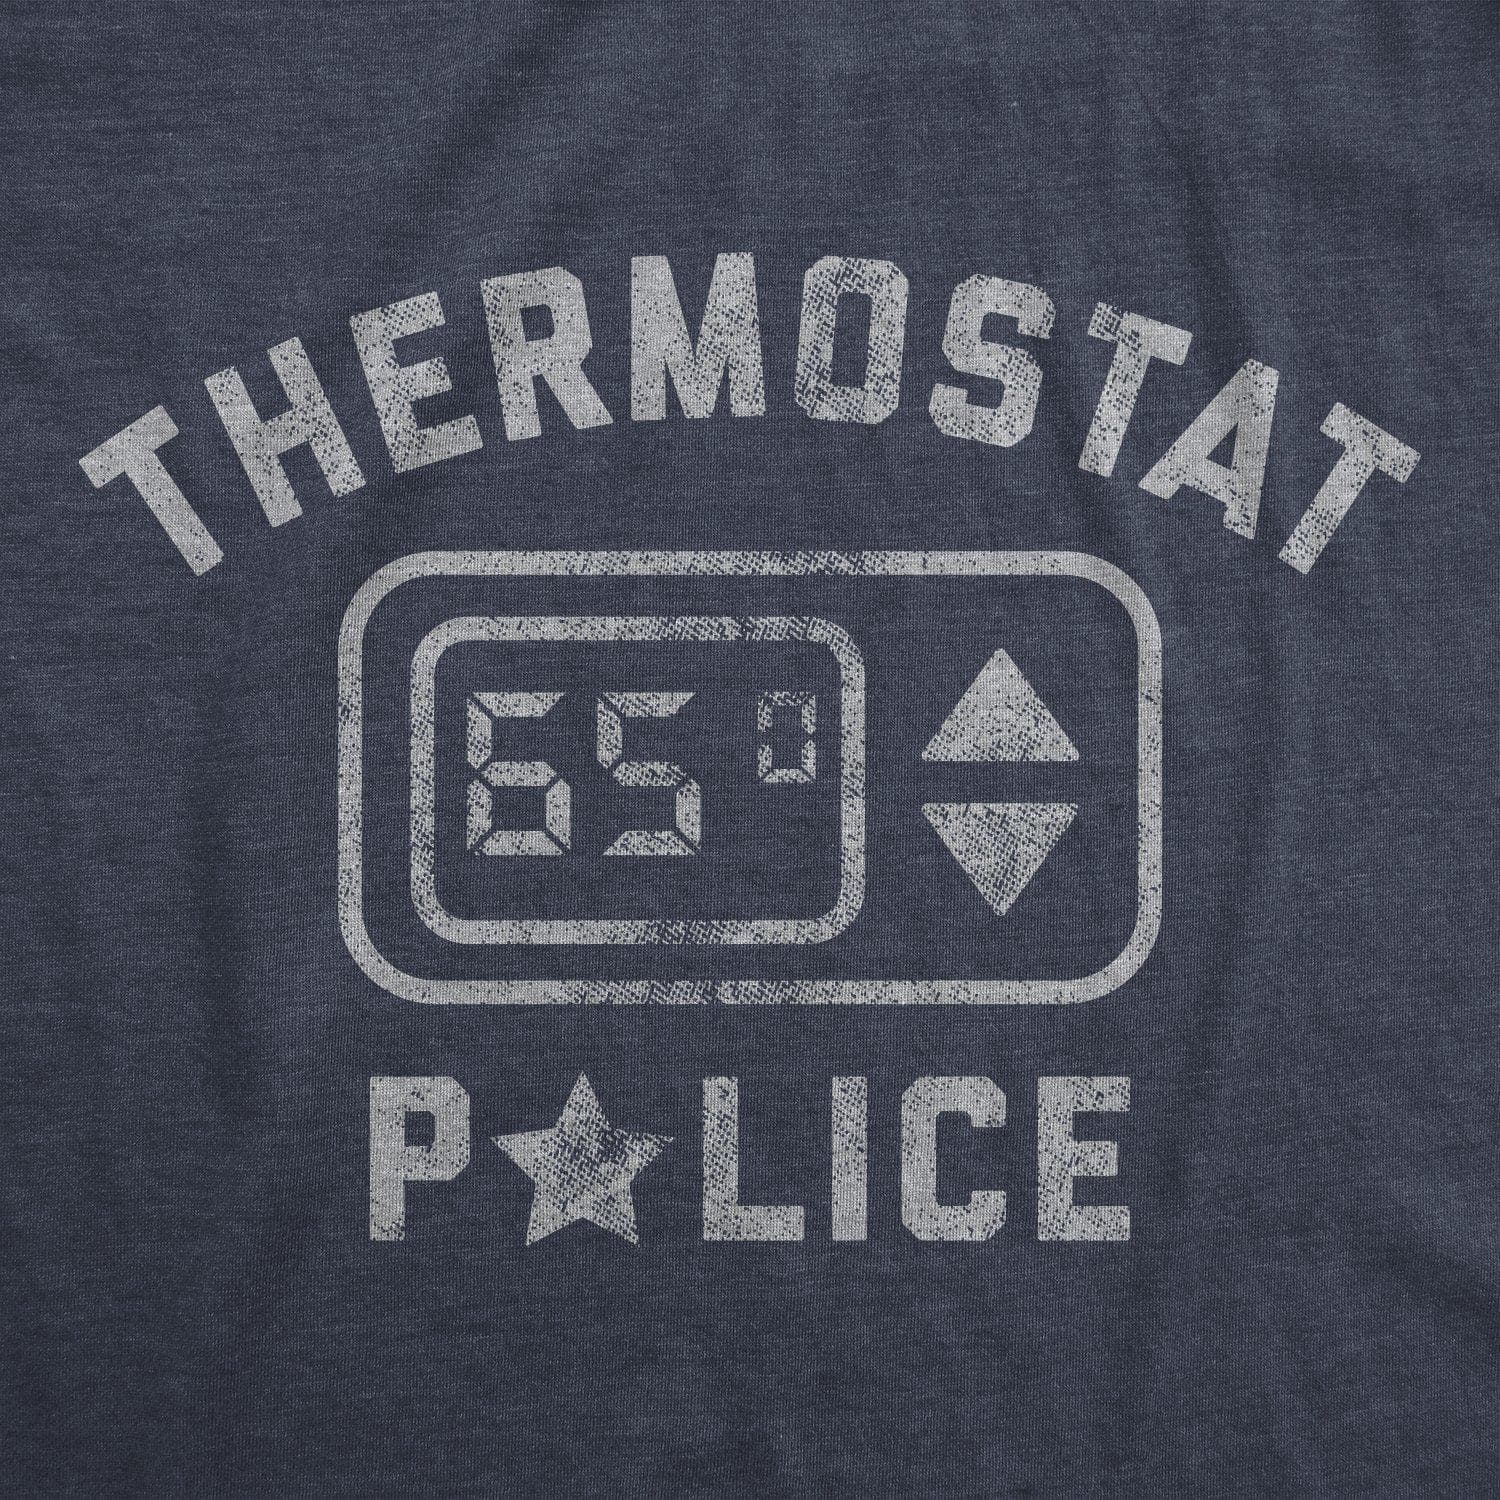 Thermostat Police Men's Tshirt - Crazy Dog T-Shirts